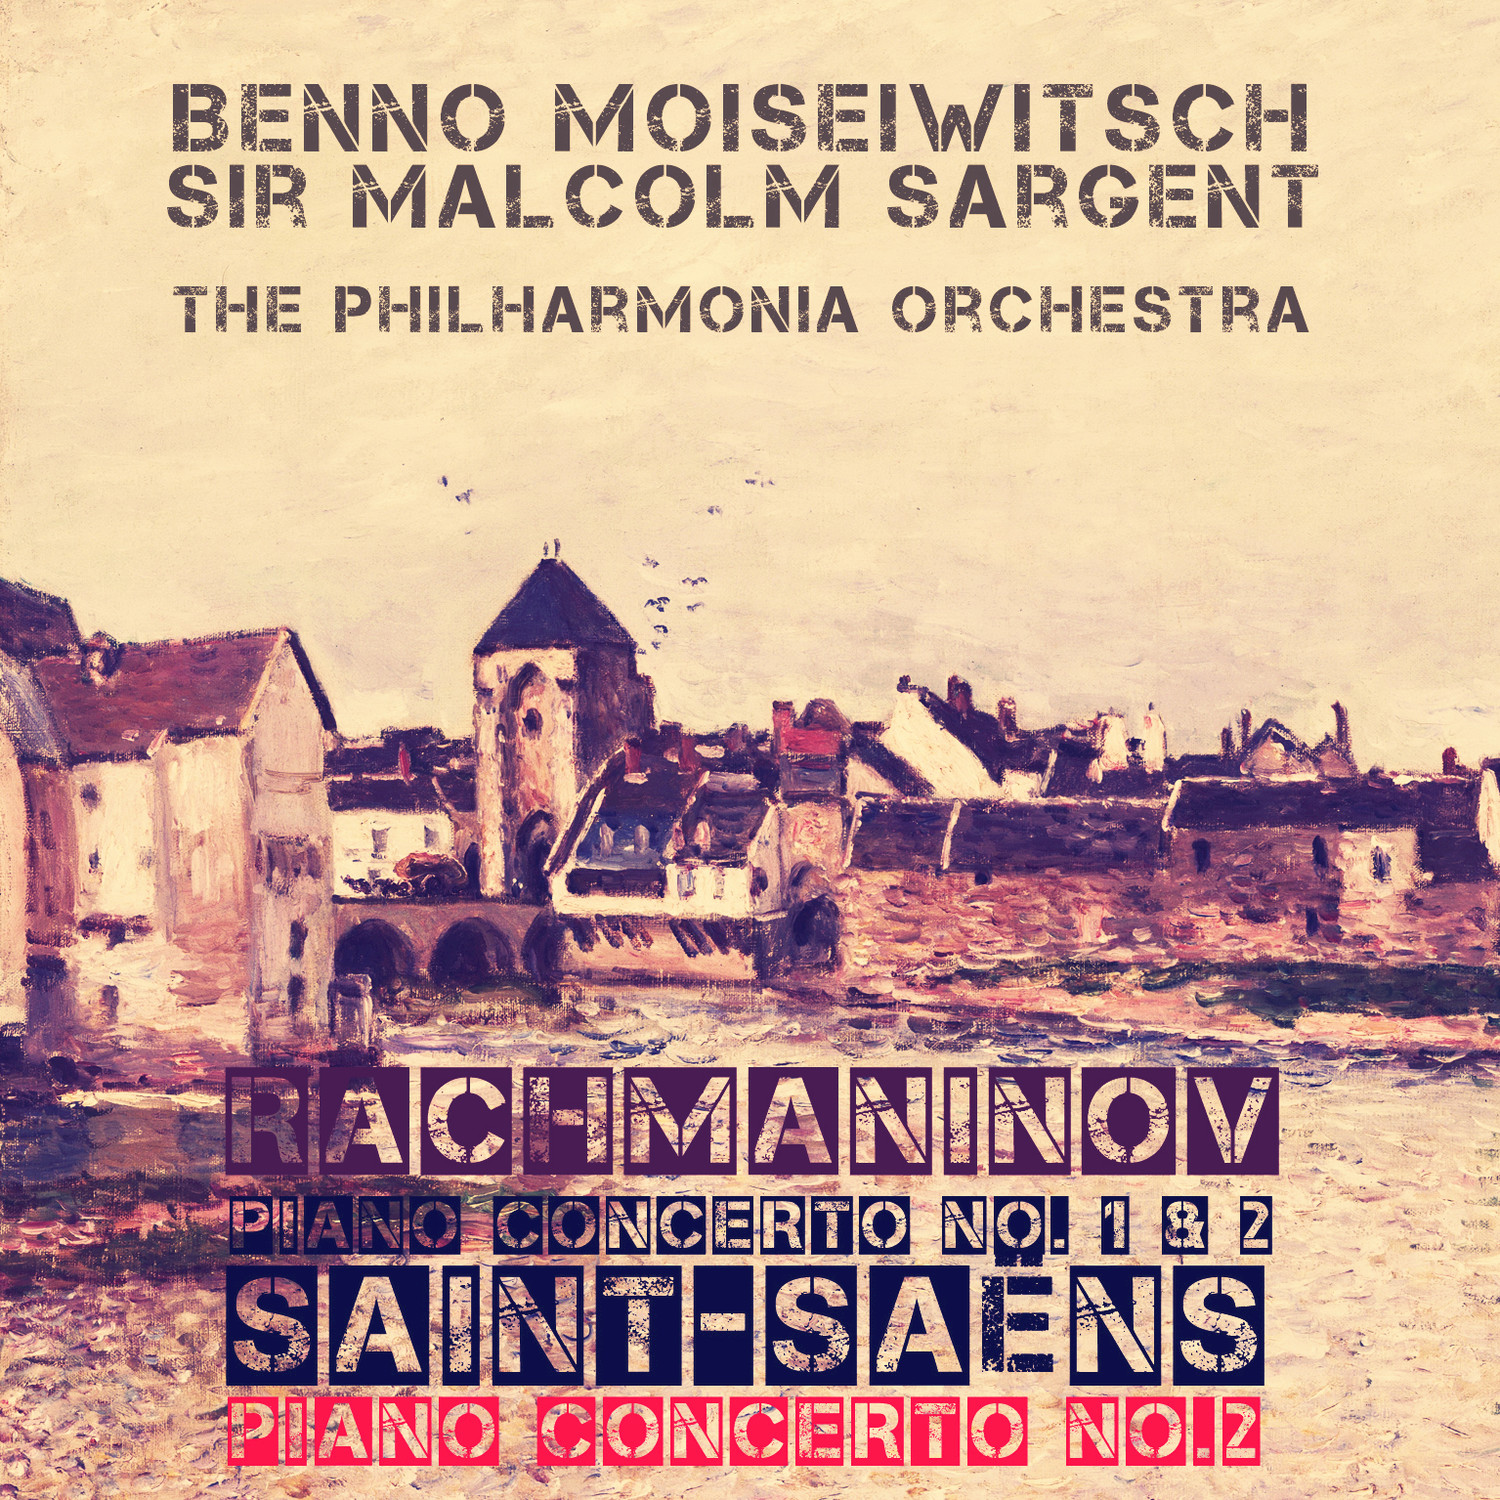 Rachmaninov: Piano Concerto No. 1 & 2 - Saint-Saëns: Piano Concerto No.2